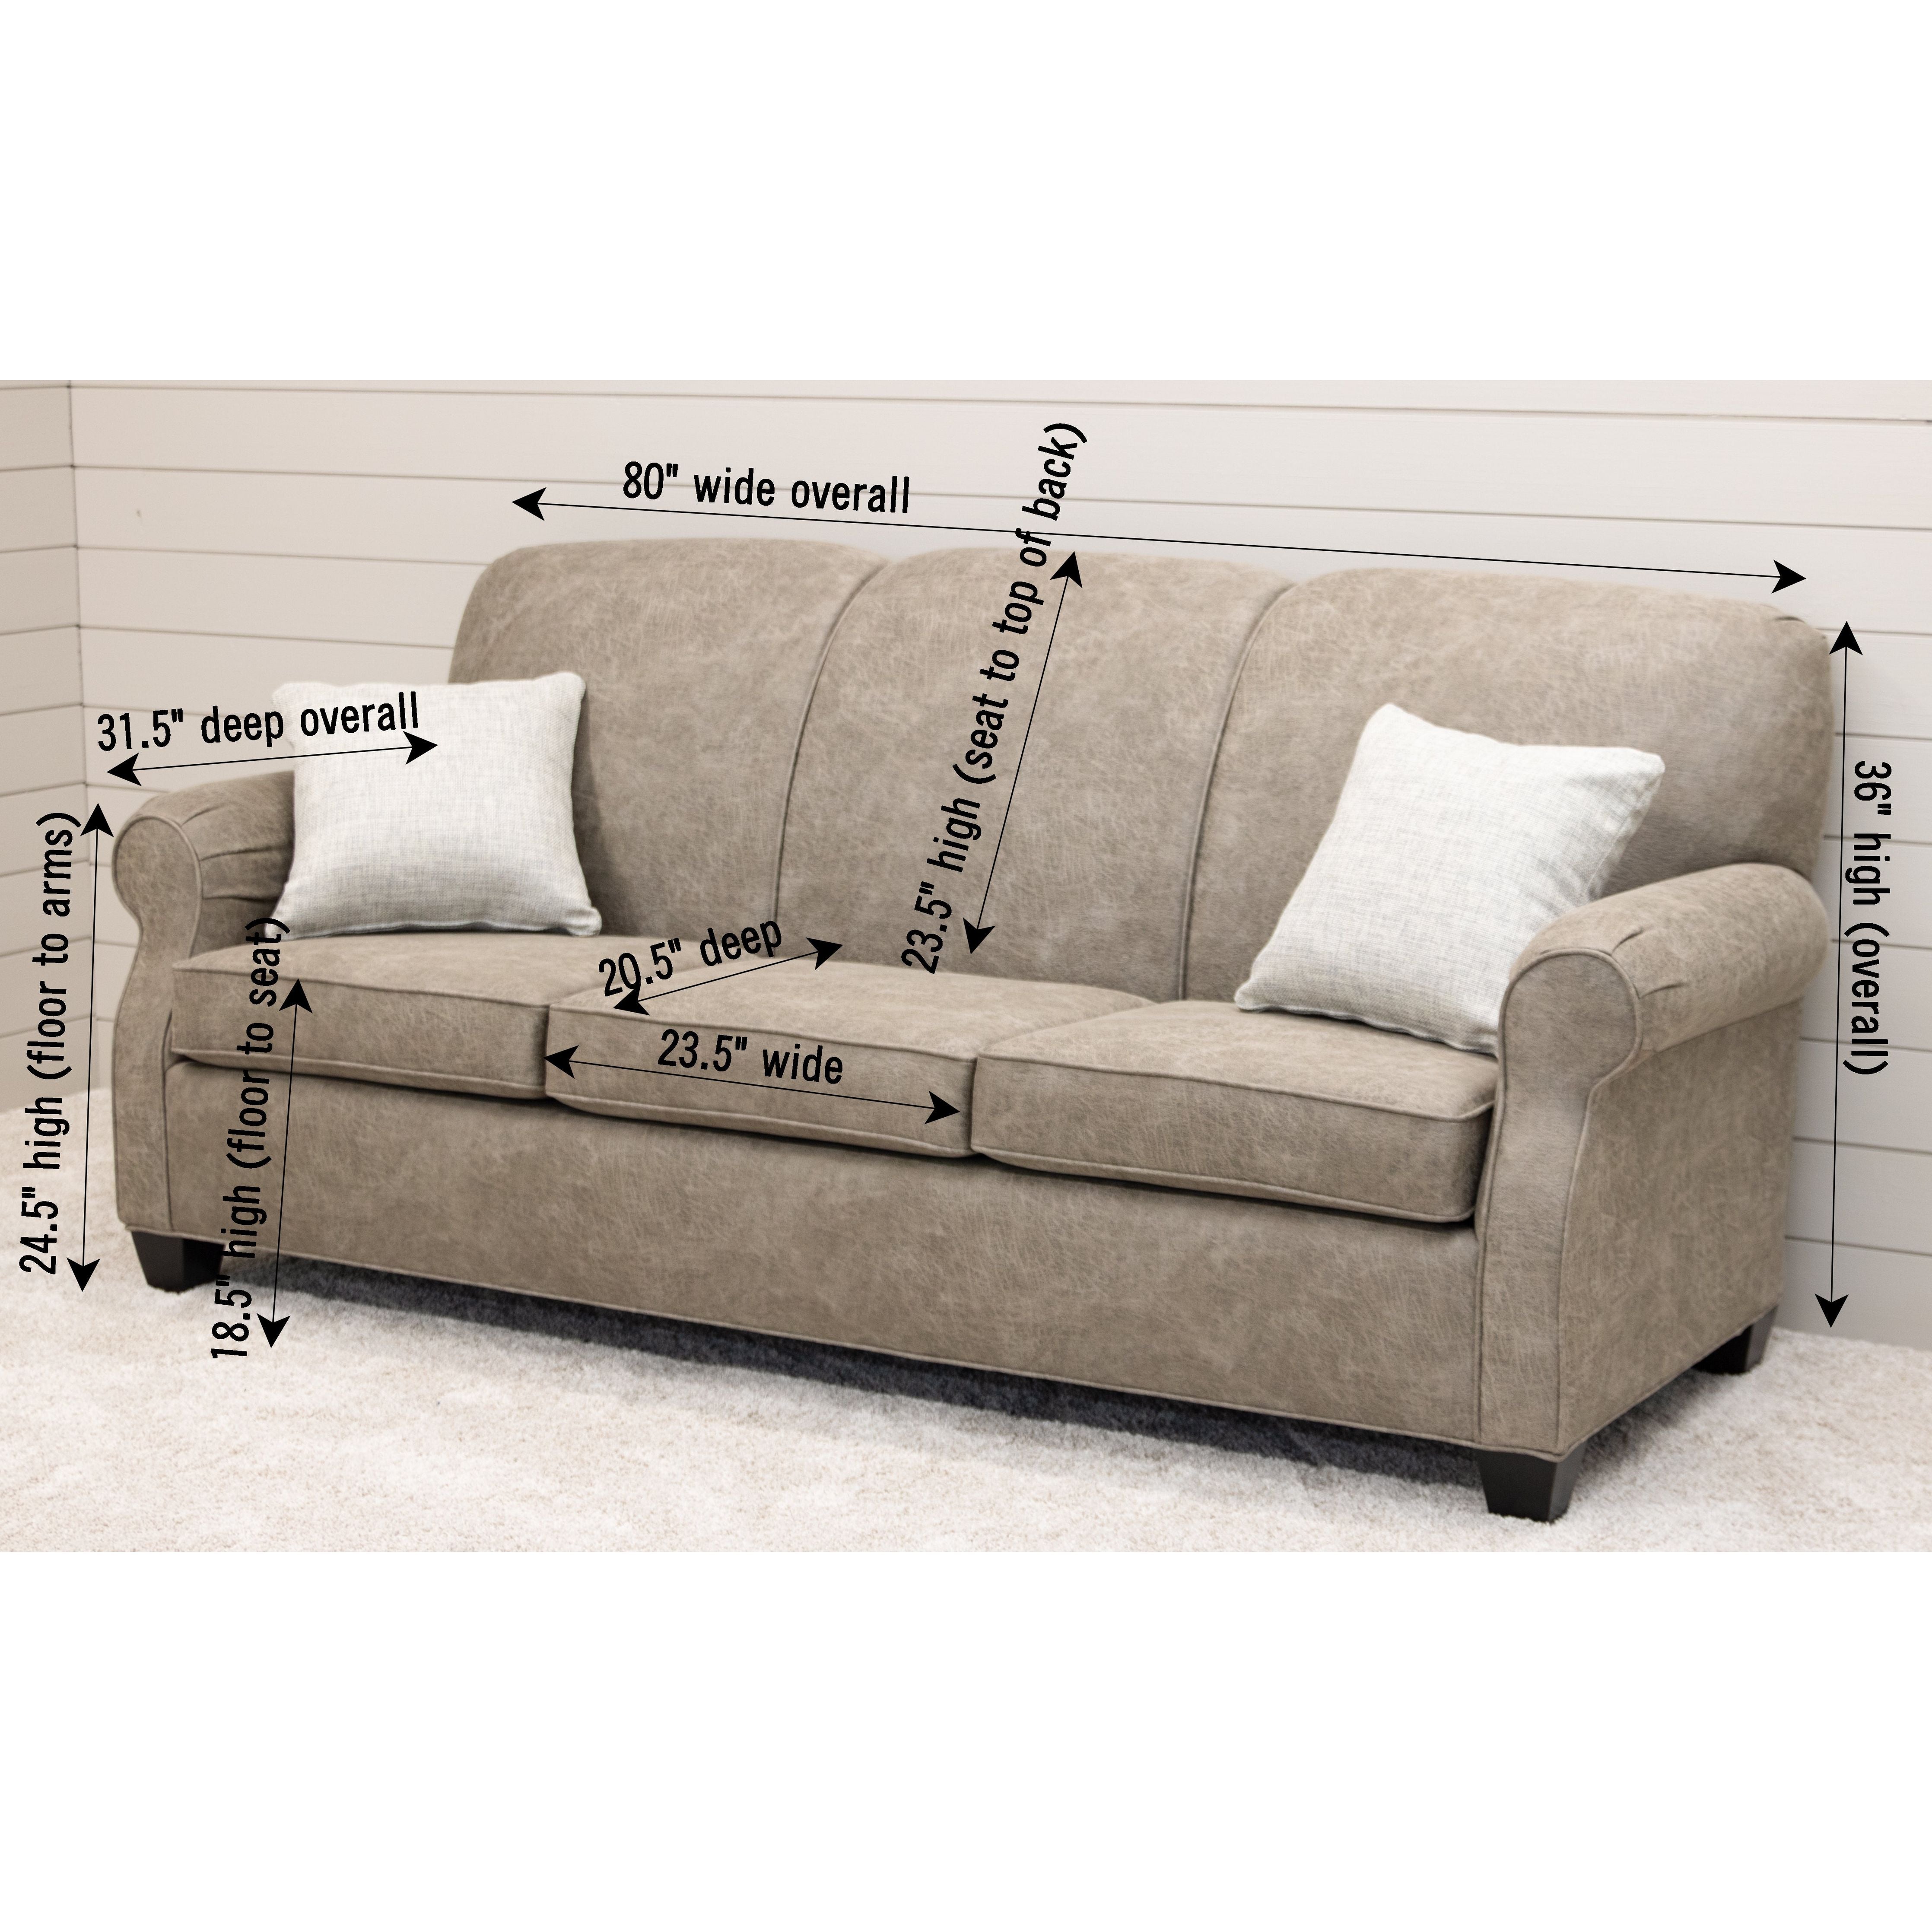 Traditional Stationary Sofa